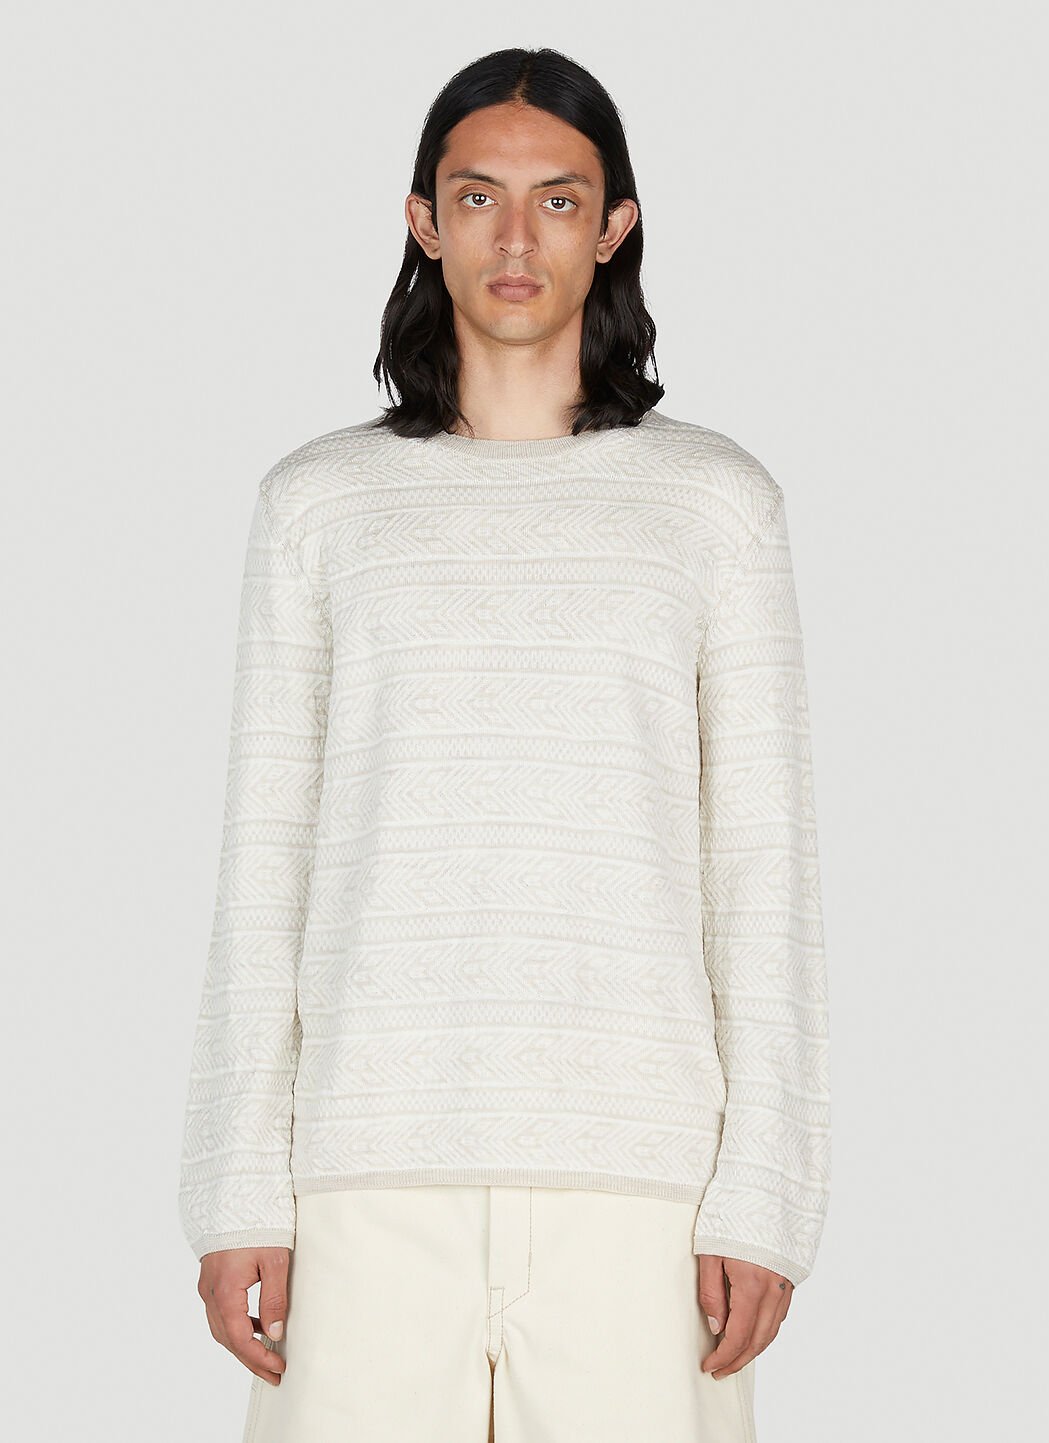 Comme des Garçons SHIRT Jacquard Sweater 白色 cdg0156002